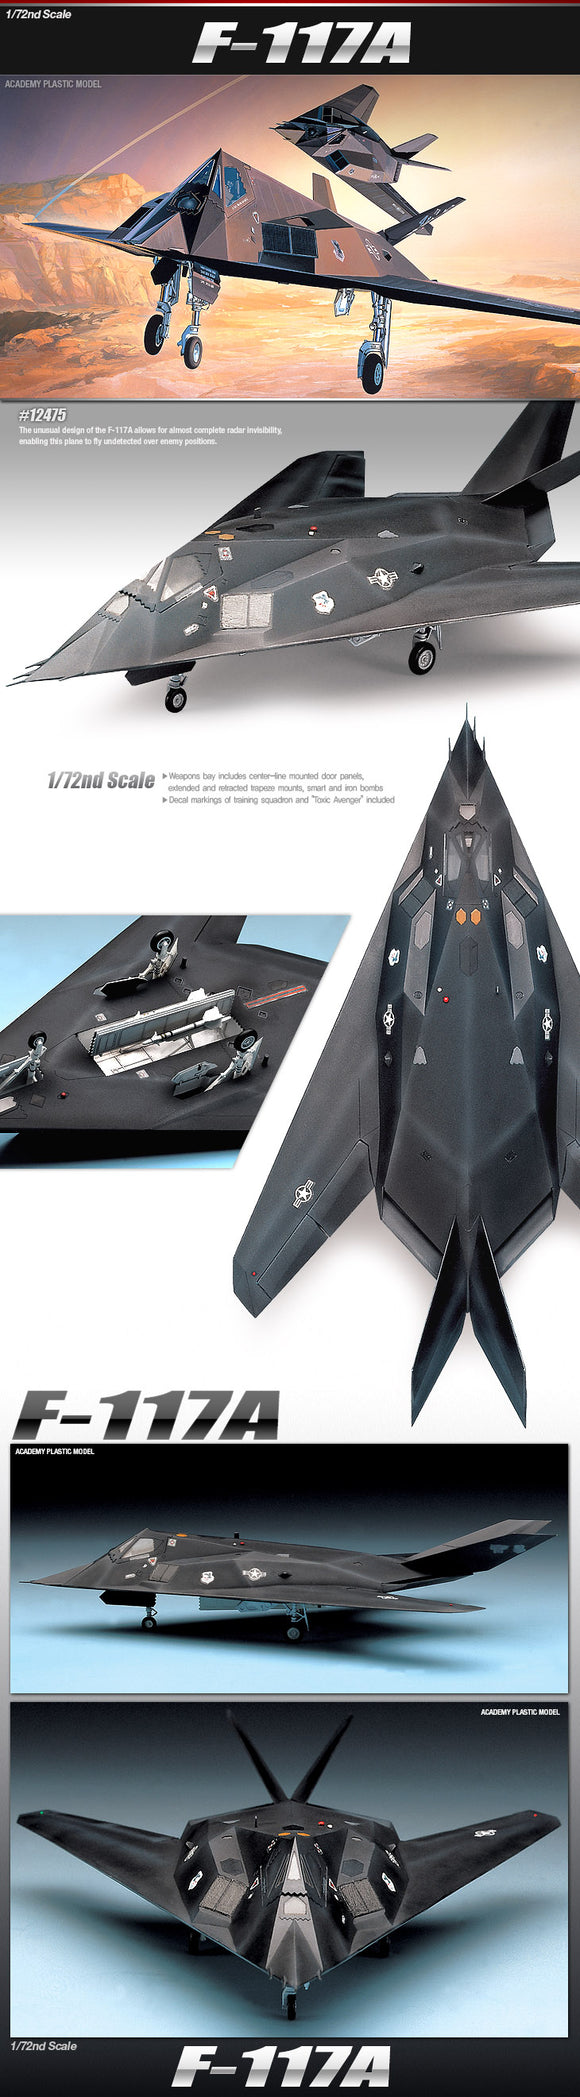 1/72 F-117A Stealth